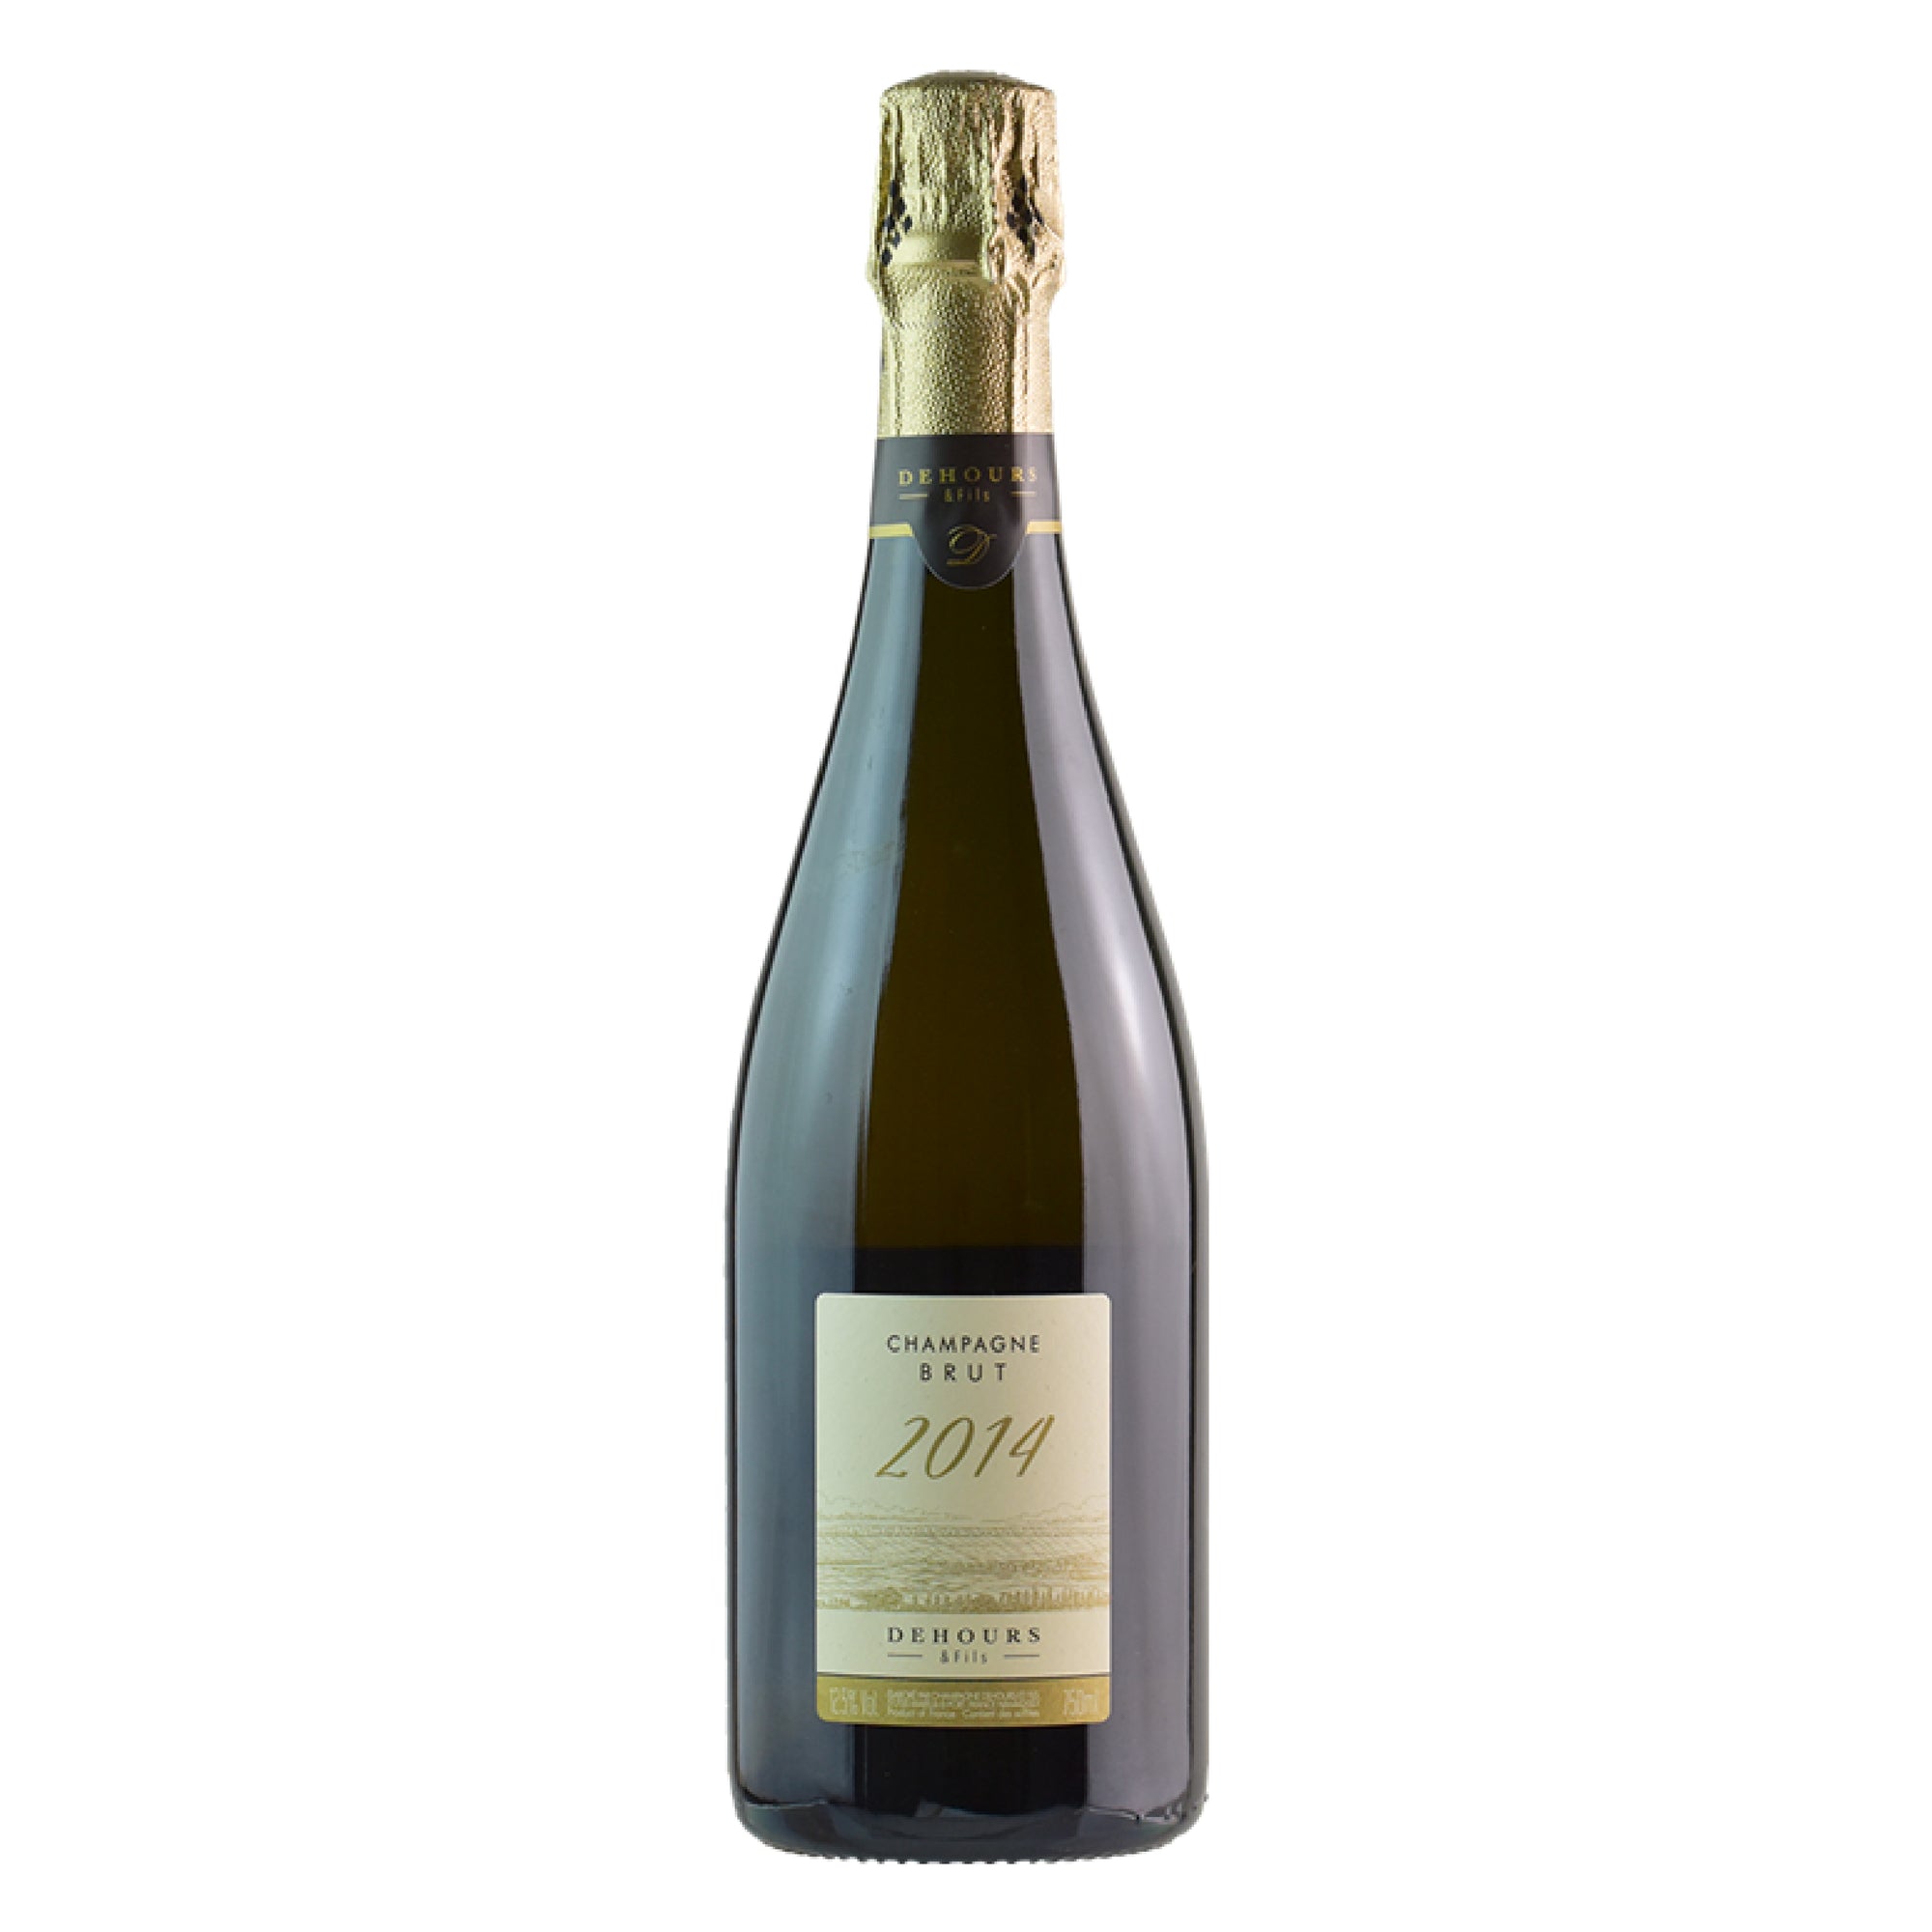 DEHOURS & FILS Champagne Brut Millesime 2014